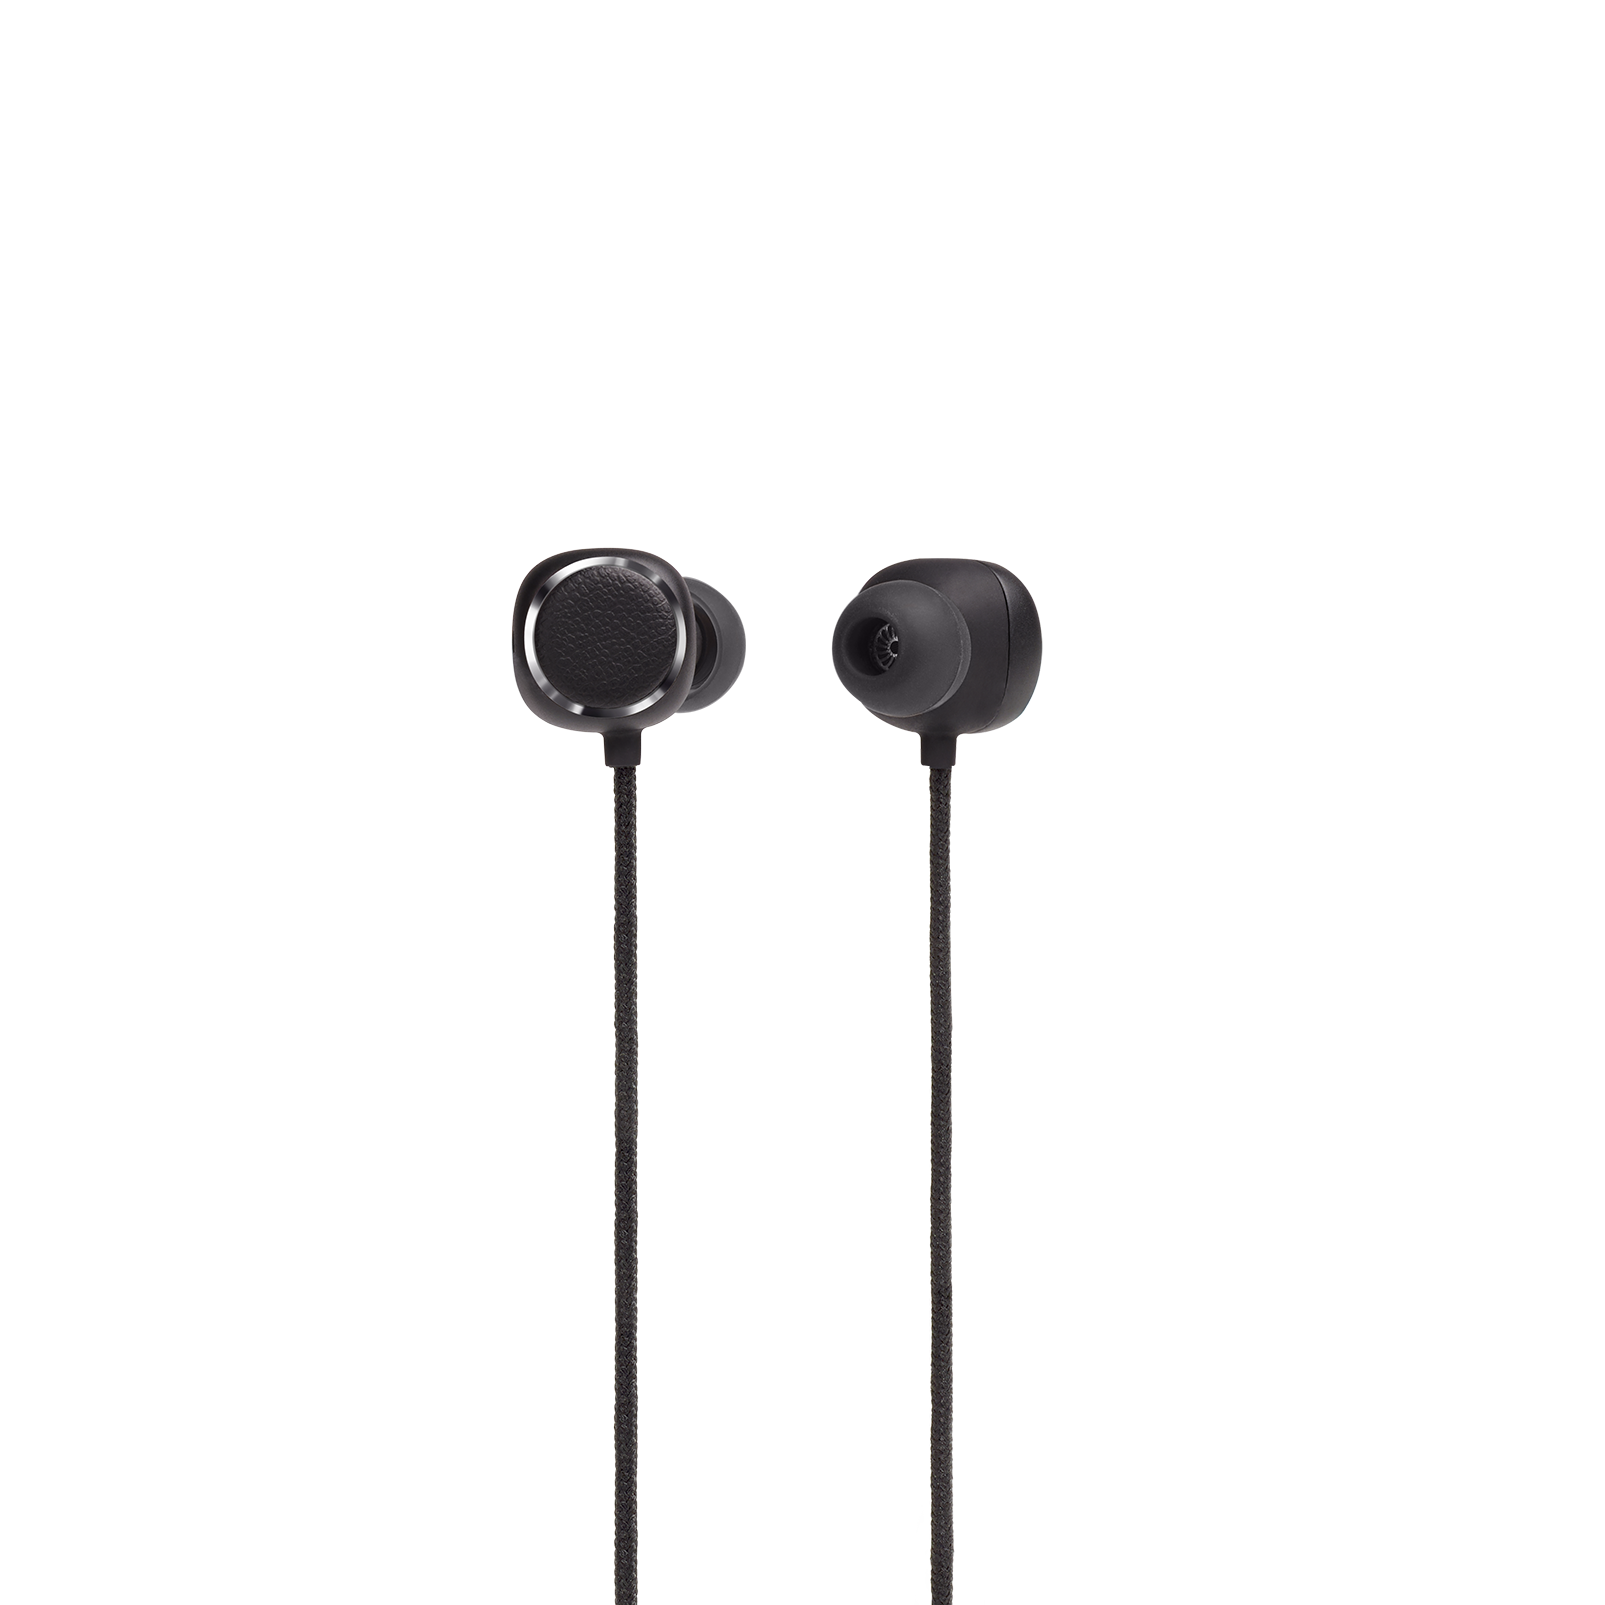 Harman Kardon FLY BT - Black - Bluetooth in-ear headphones - Front